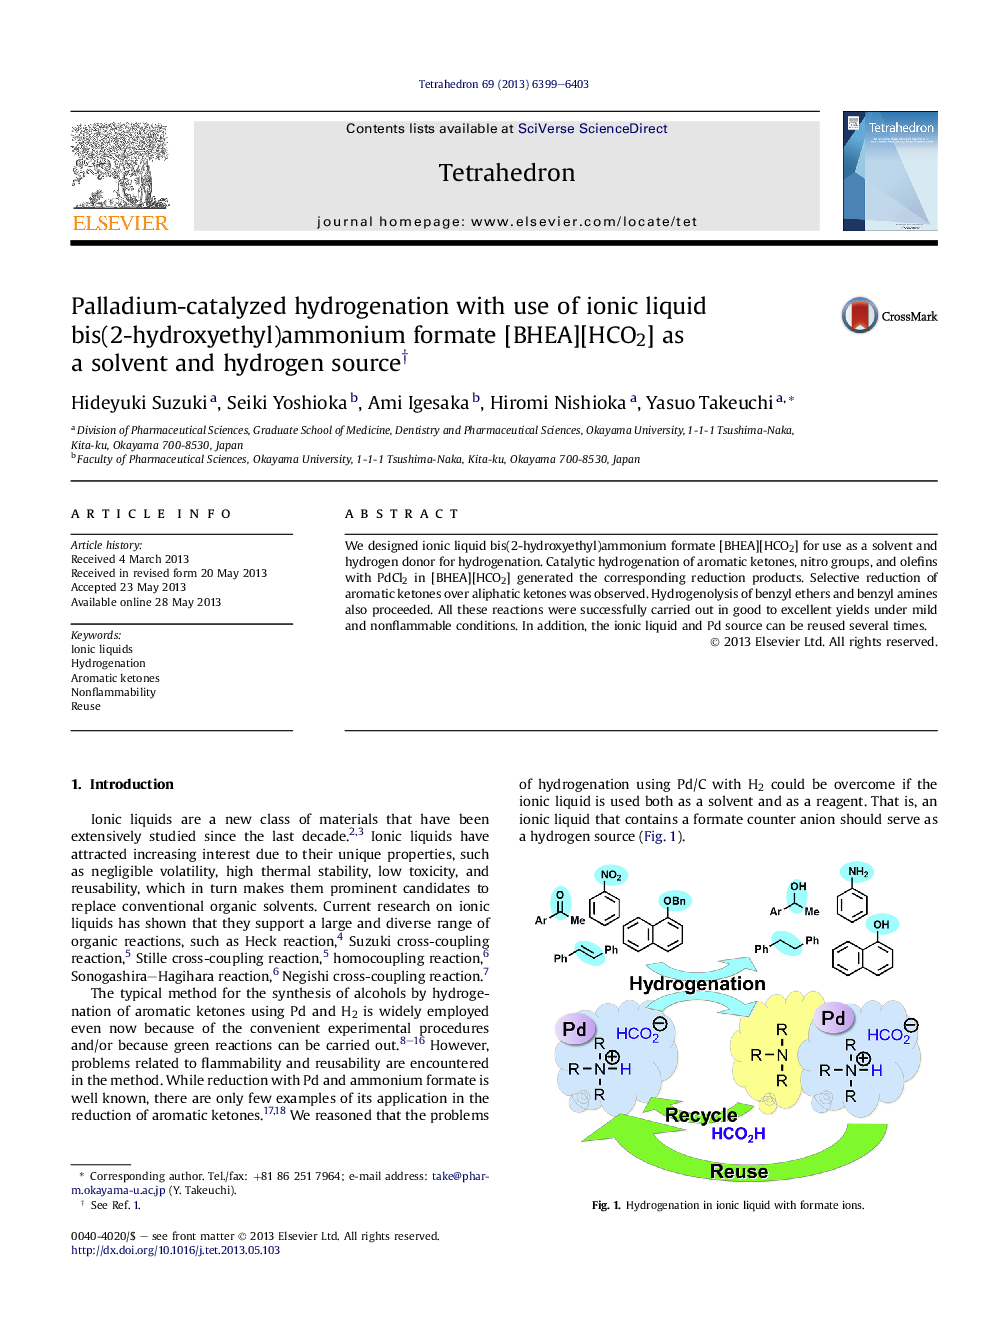 Palladium-catalyzed hydrogenation with use of ionic liquid bis(2-hydroxyethyl)ammonium formate [BHEA][HCO2] as a solventÂ and hydrogen sourceâ 